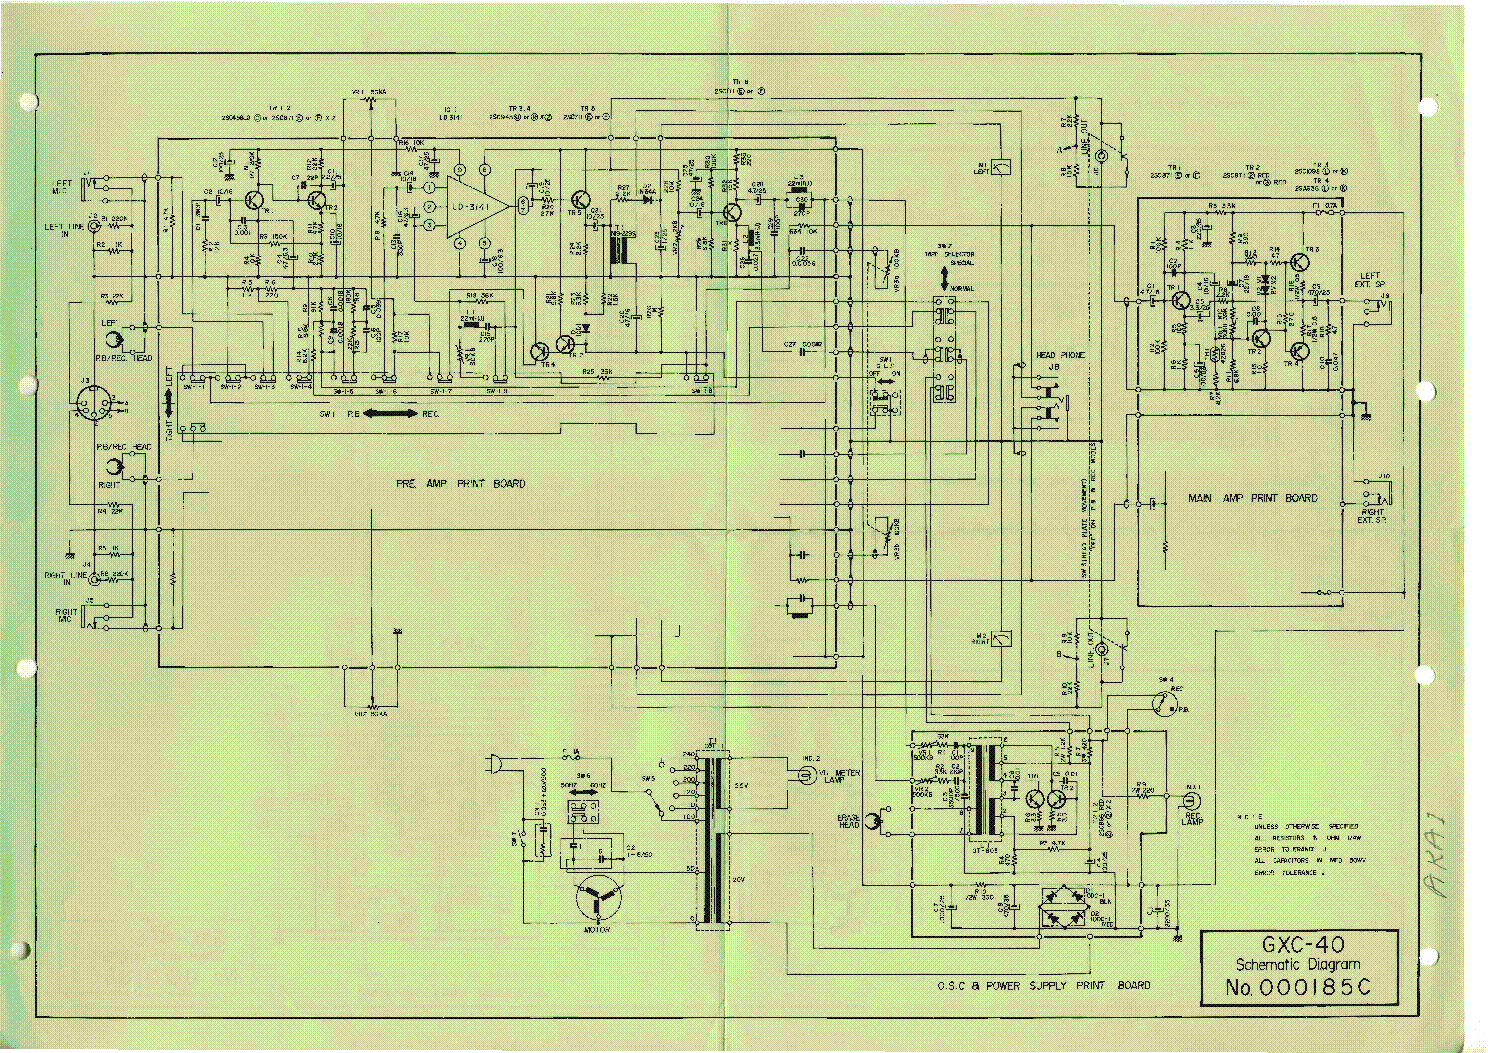 AKAI GXC-40 MAGNETOPHON SCH service manual (1st page)